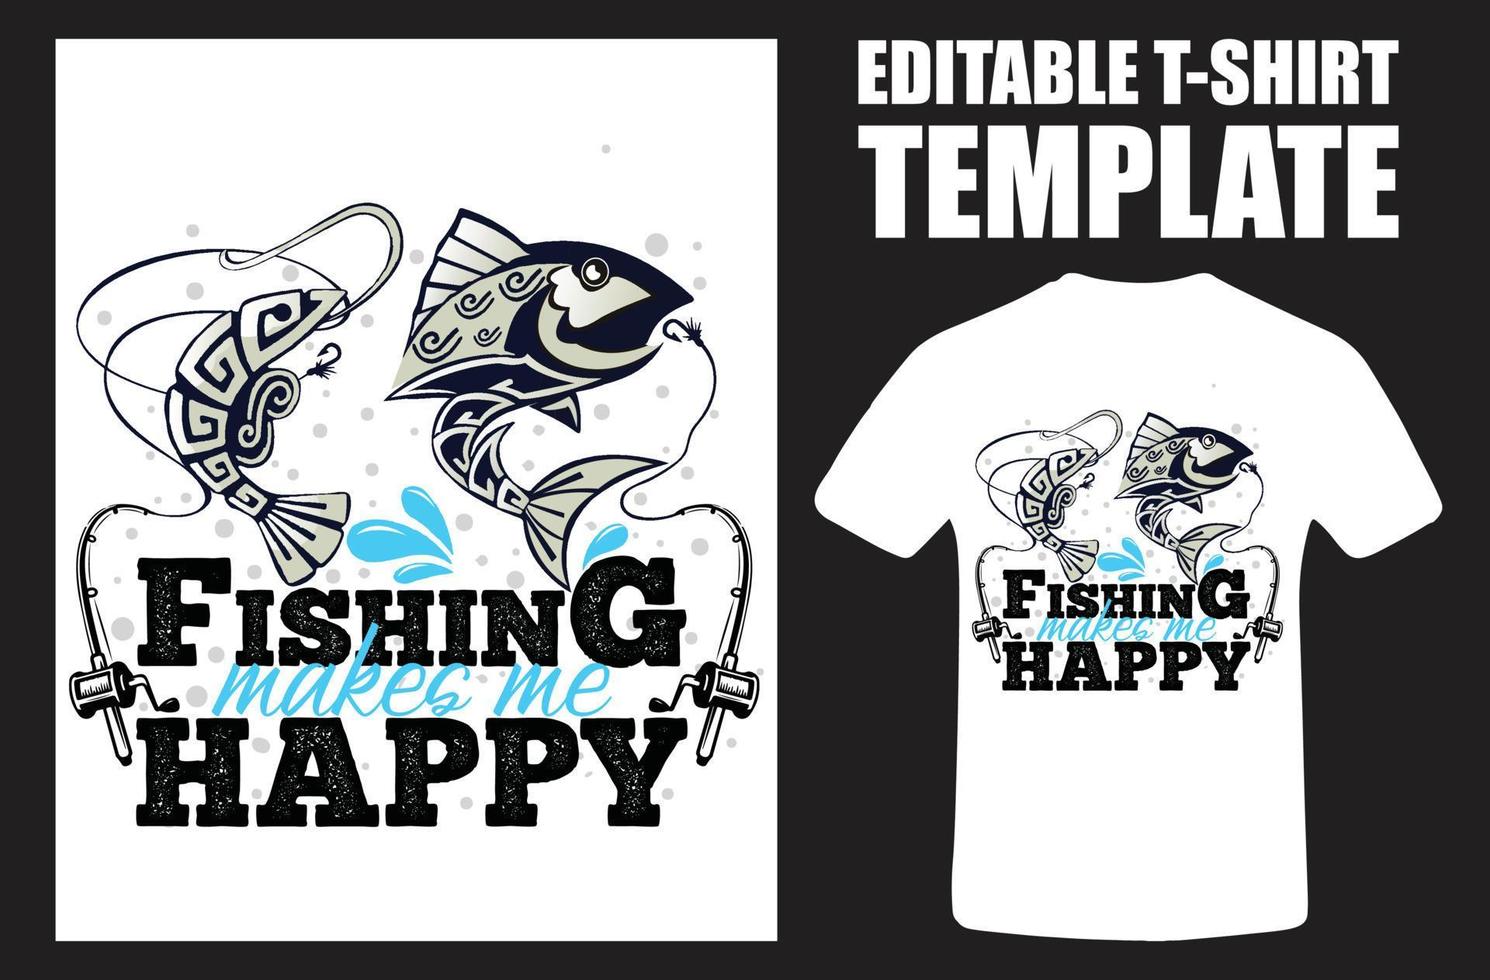 visvangst maakt me gelukkig visvangst t shirt. typografie visvangst t shirt. visvangst maakt me gelukkig typografie t-shirt.eps vector